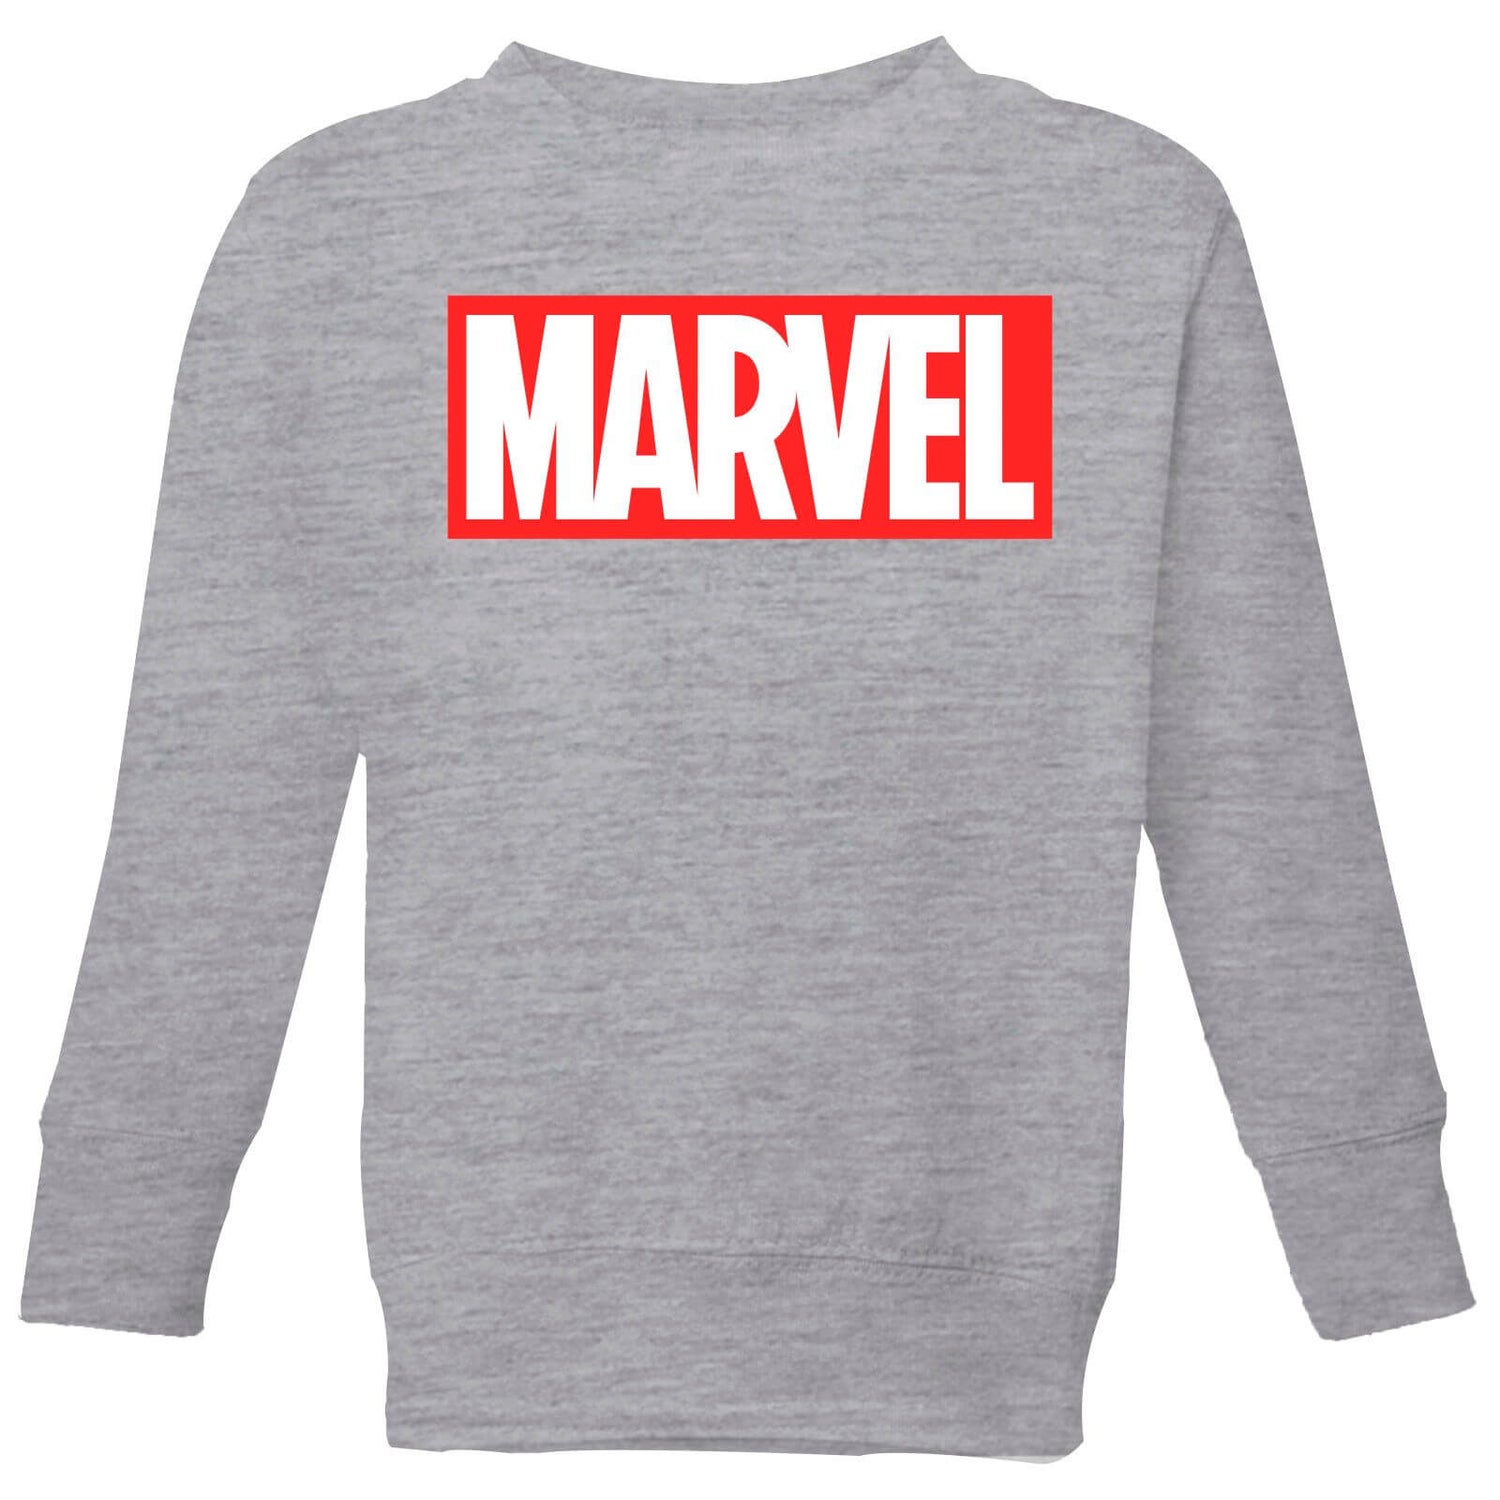 Marvel Logo Kids' Sweatshirt - Grey